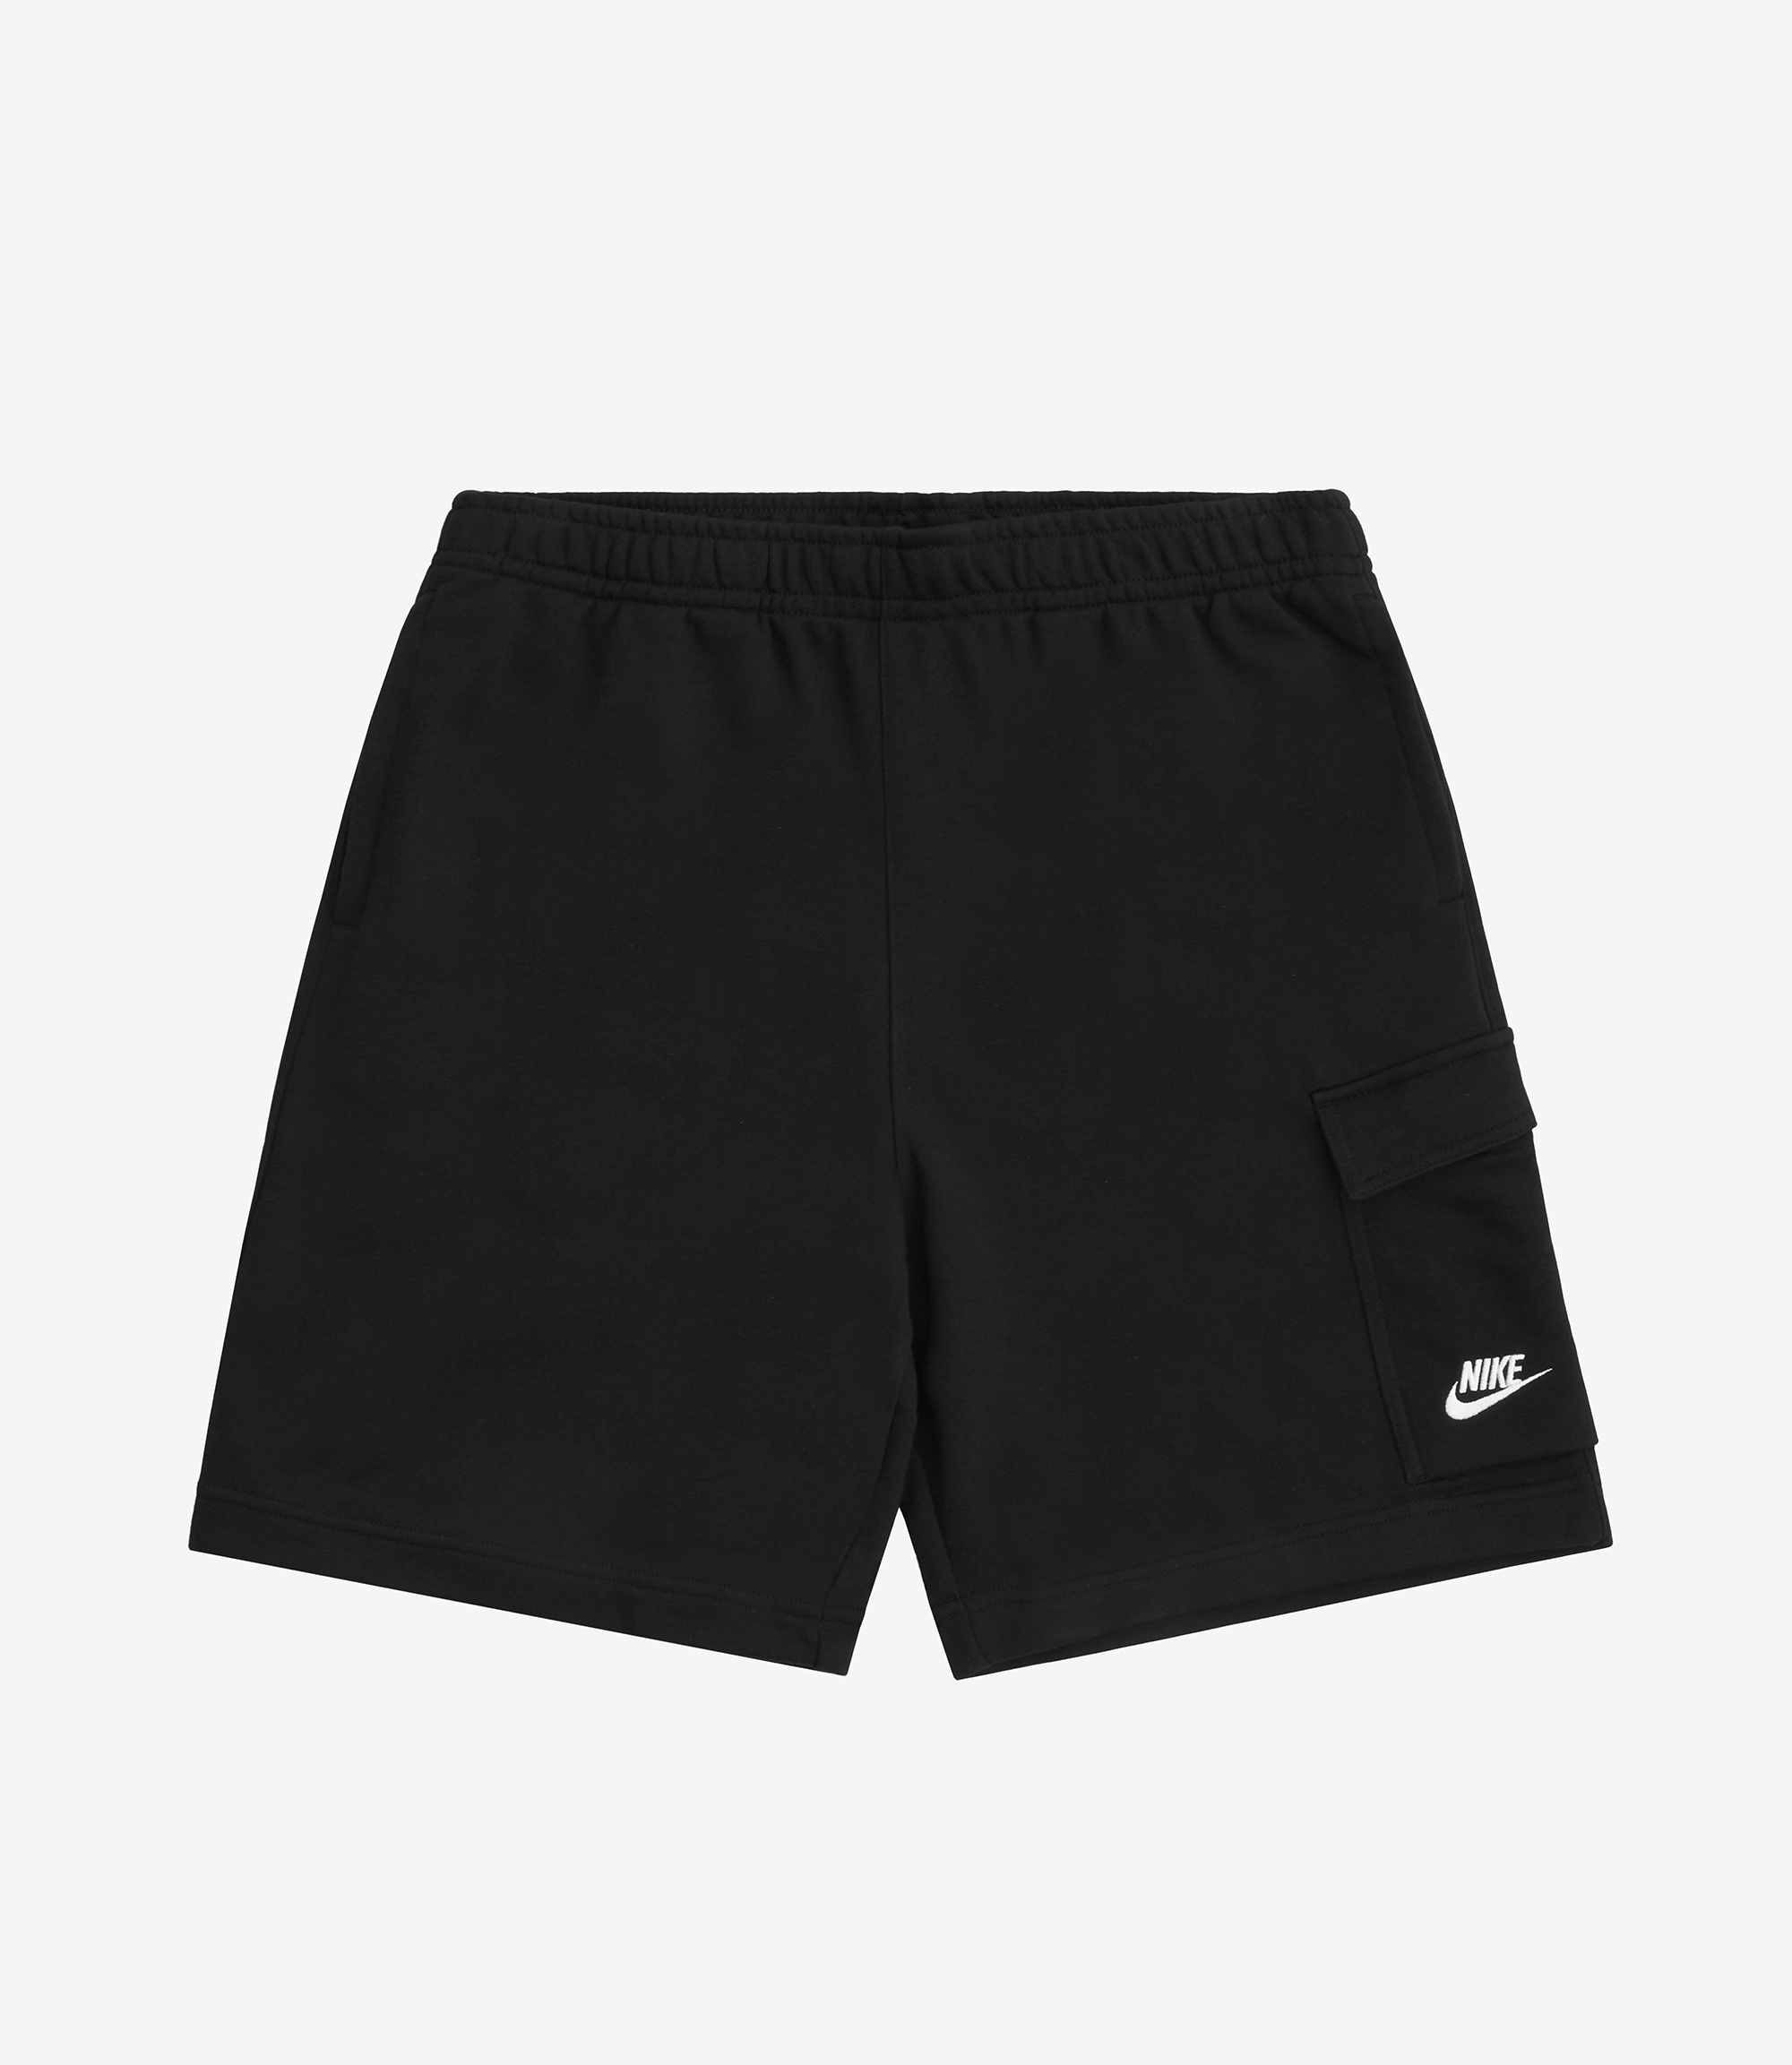 Shop Nike Sportswear Cargo Short Black at itk online store